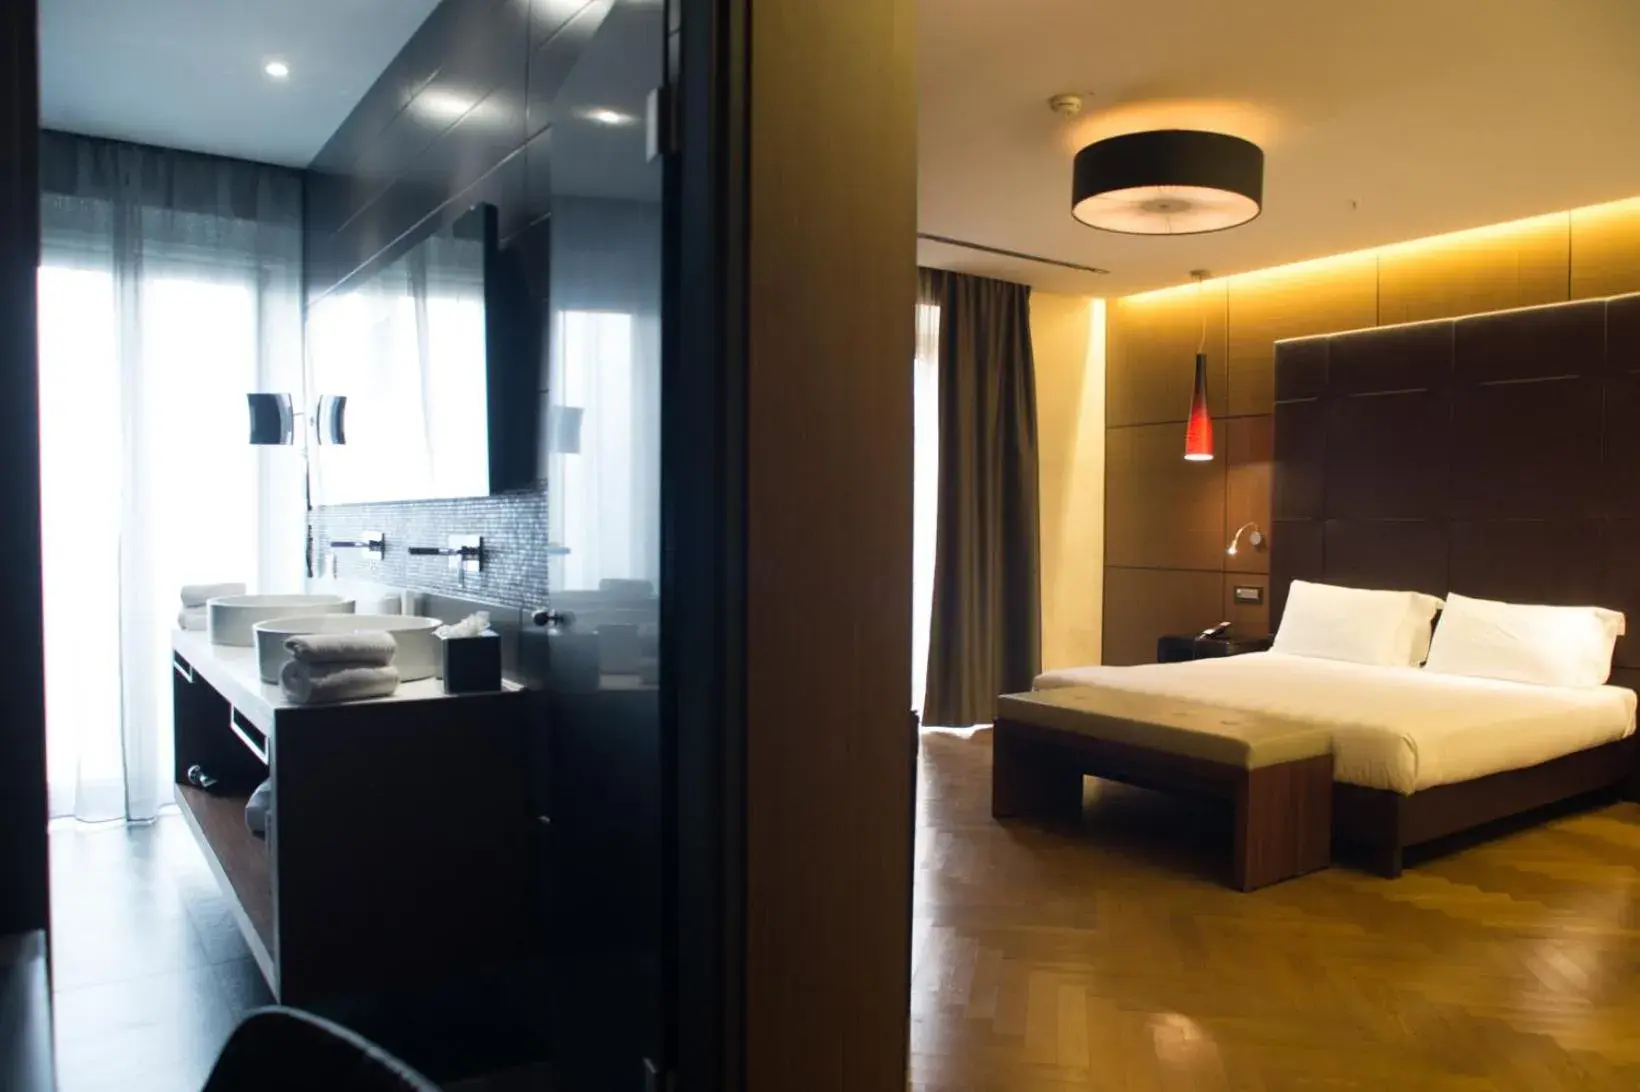 Photo of the whole room, Bathroom in Diva Luxury Hotel